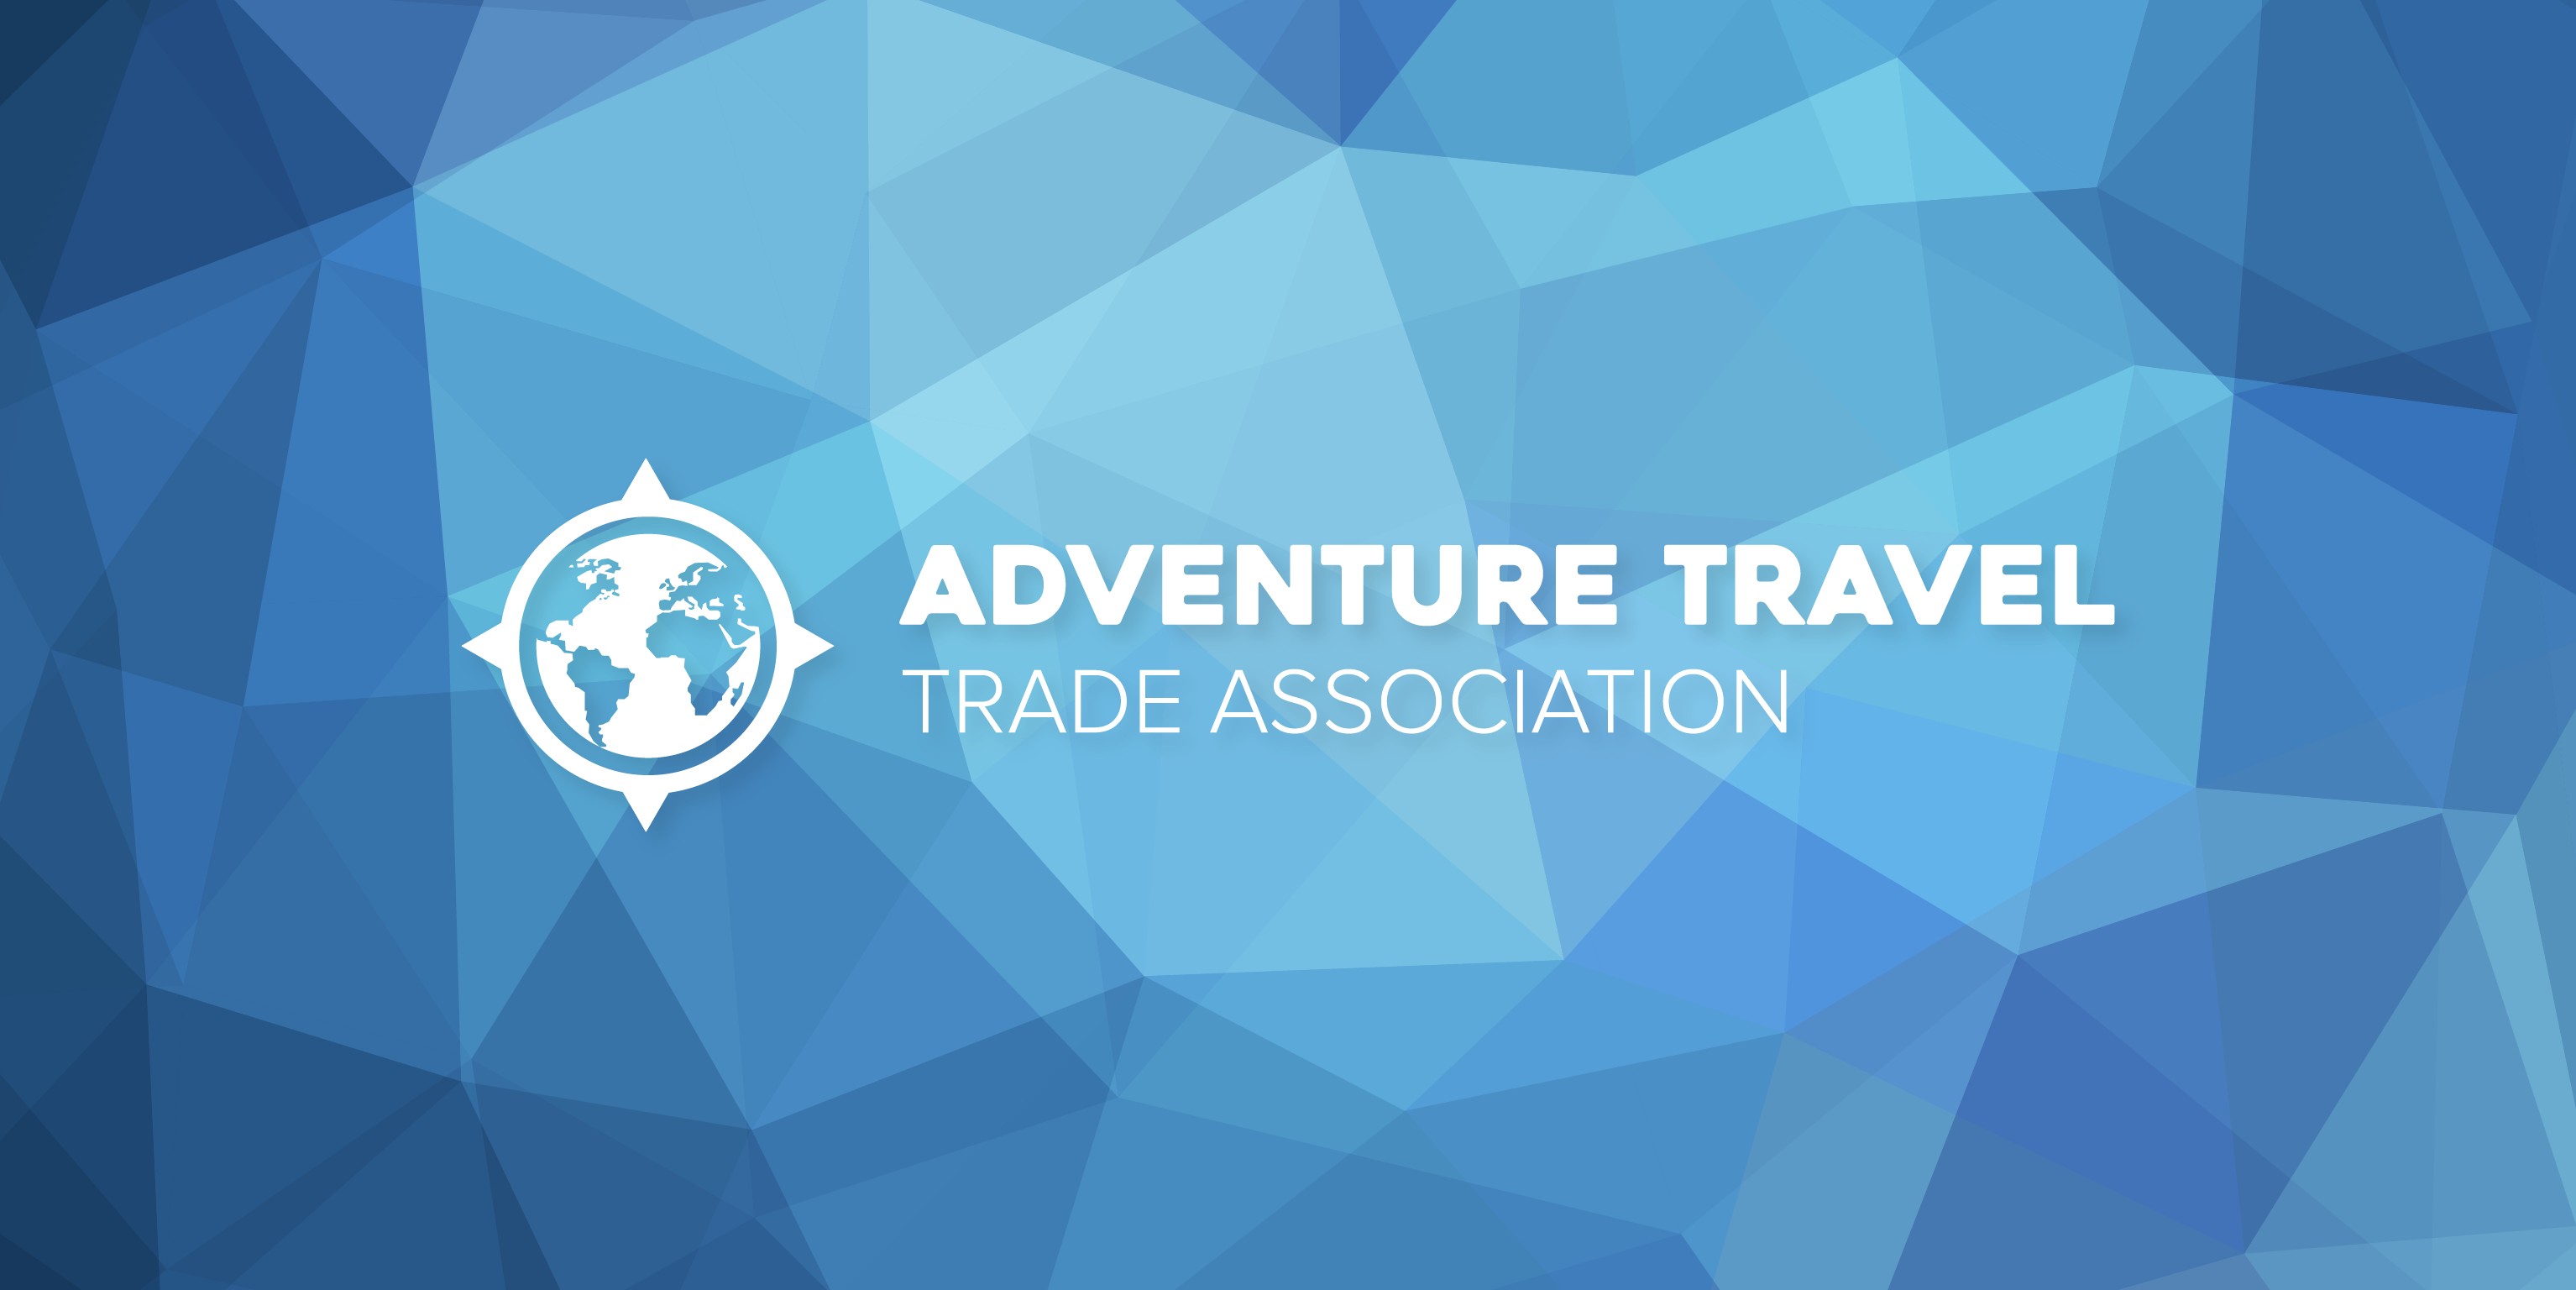 Adventure Travel Trade Association | LinkedIn